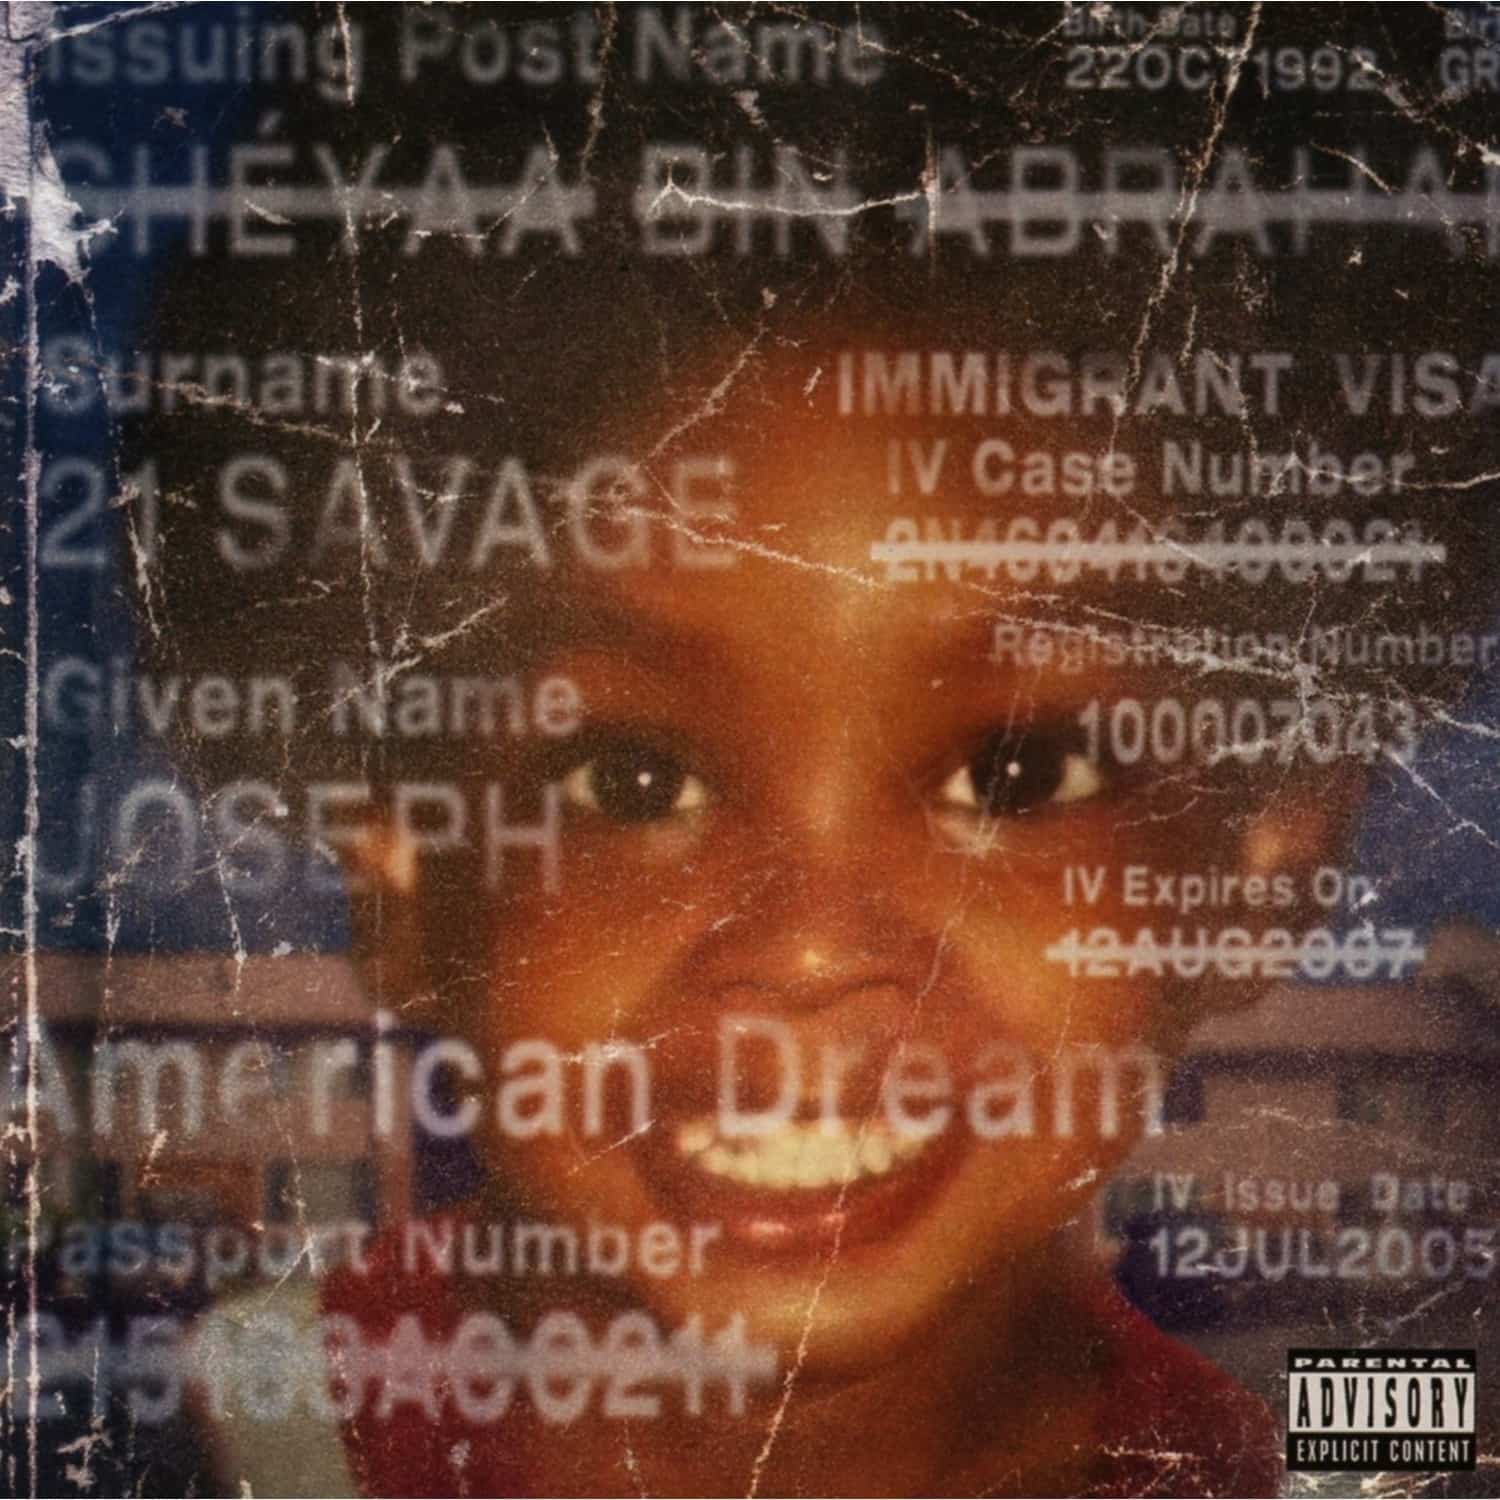 21 Savage - AMERICAN DREAM 